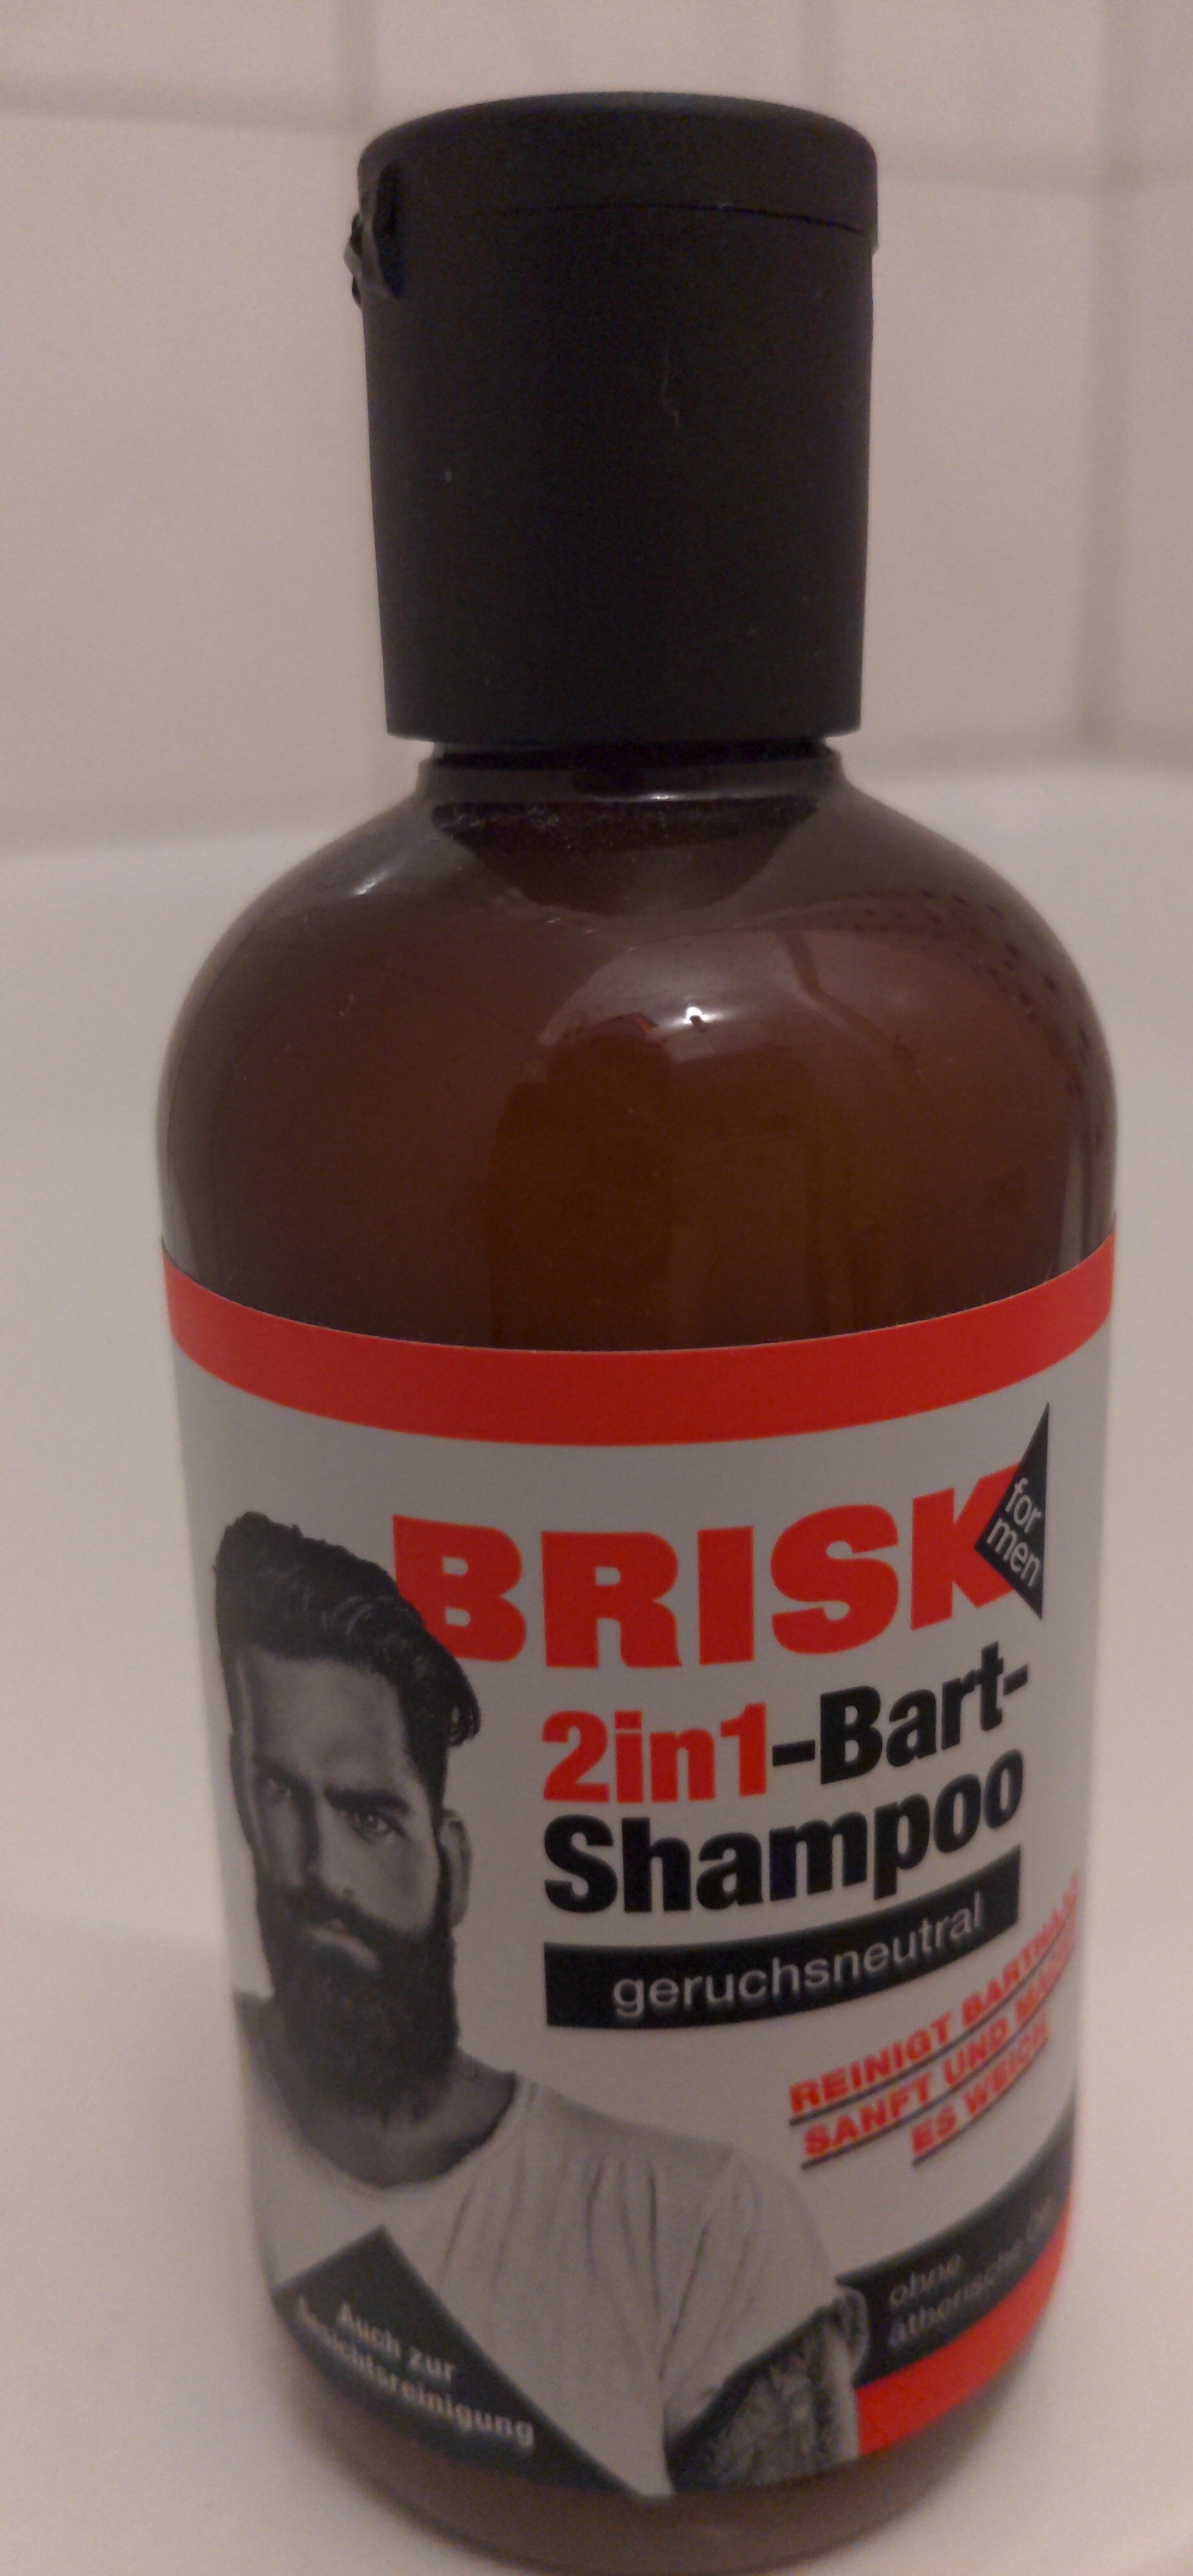 2in1-Bart-Shampoo - Produkt - de